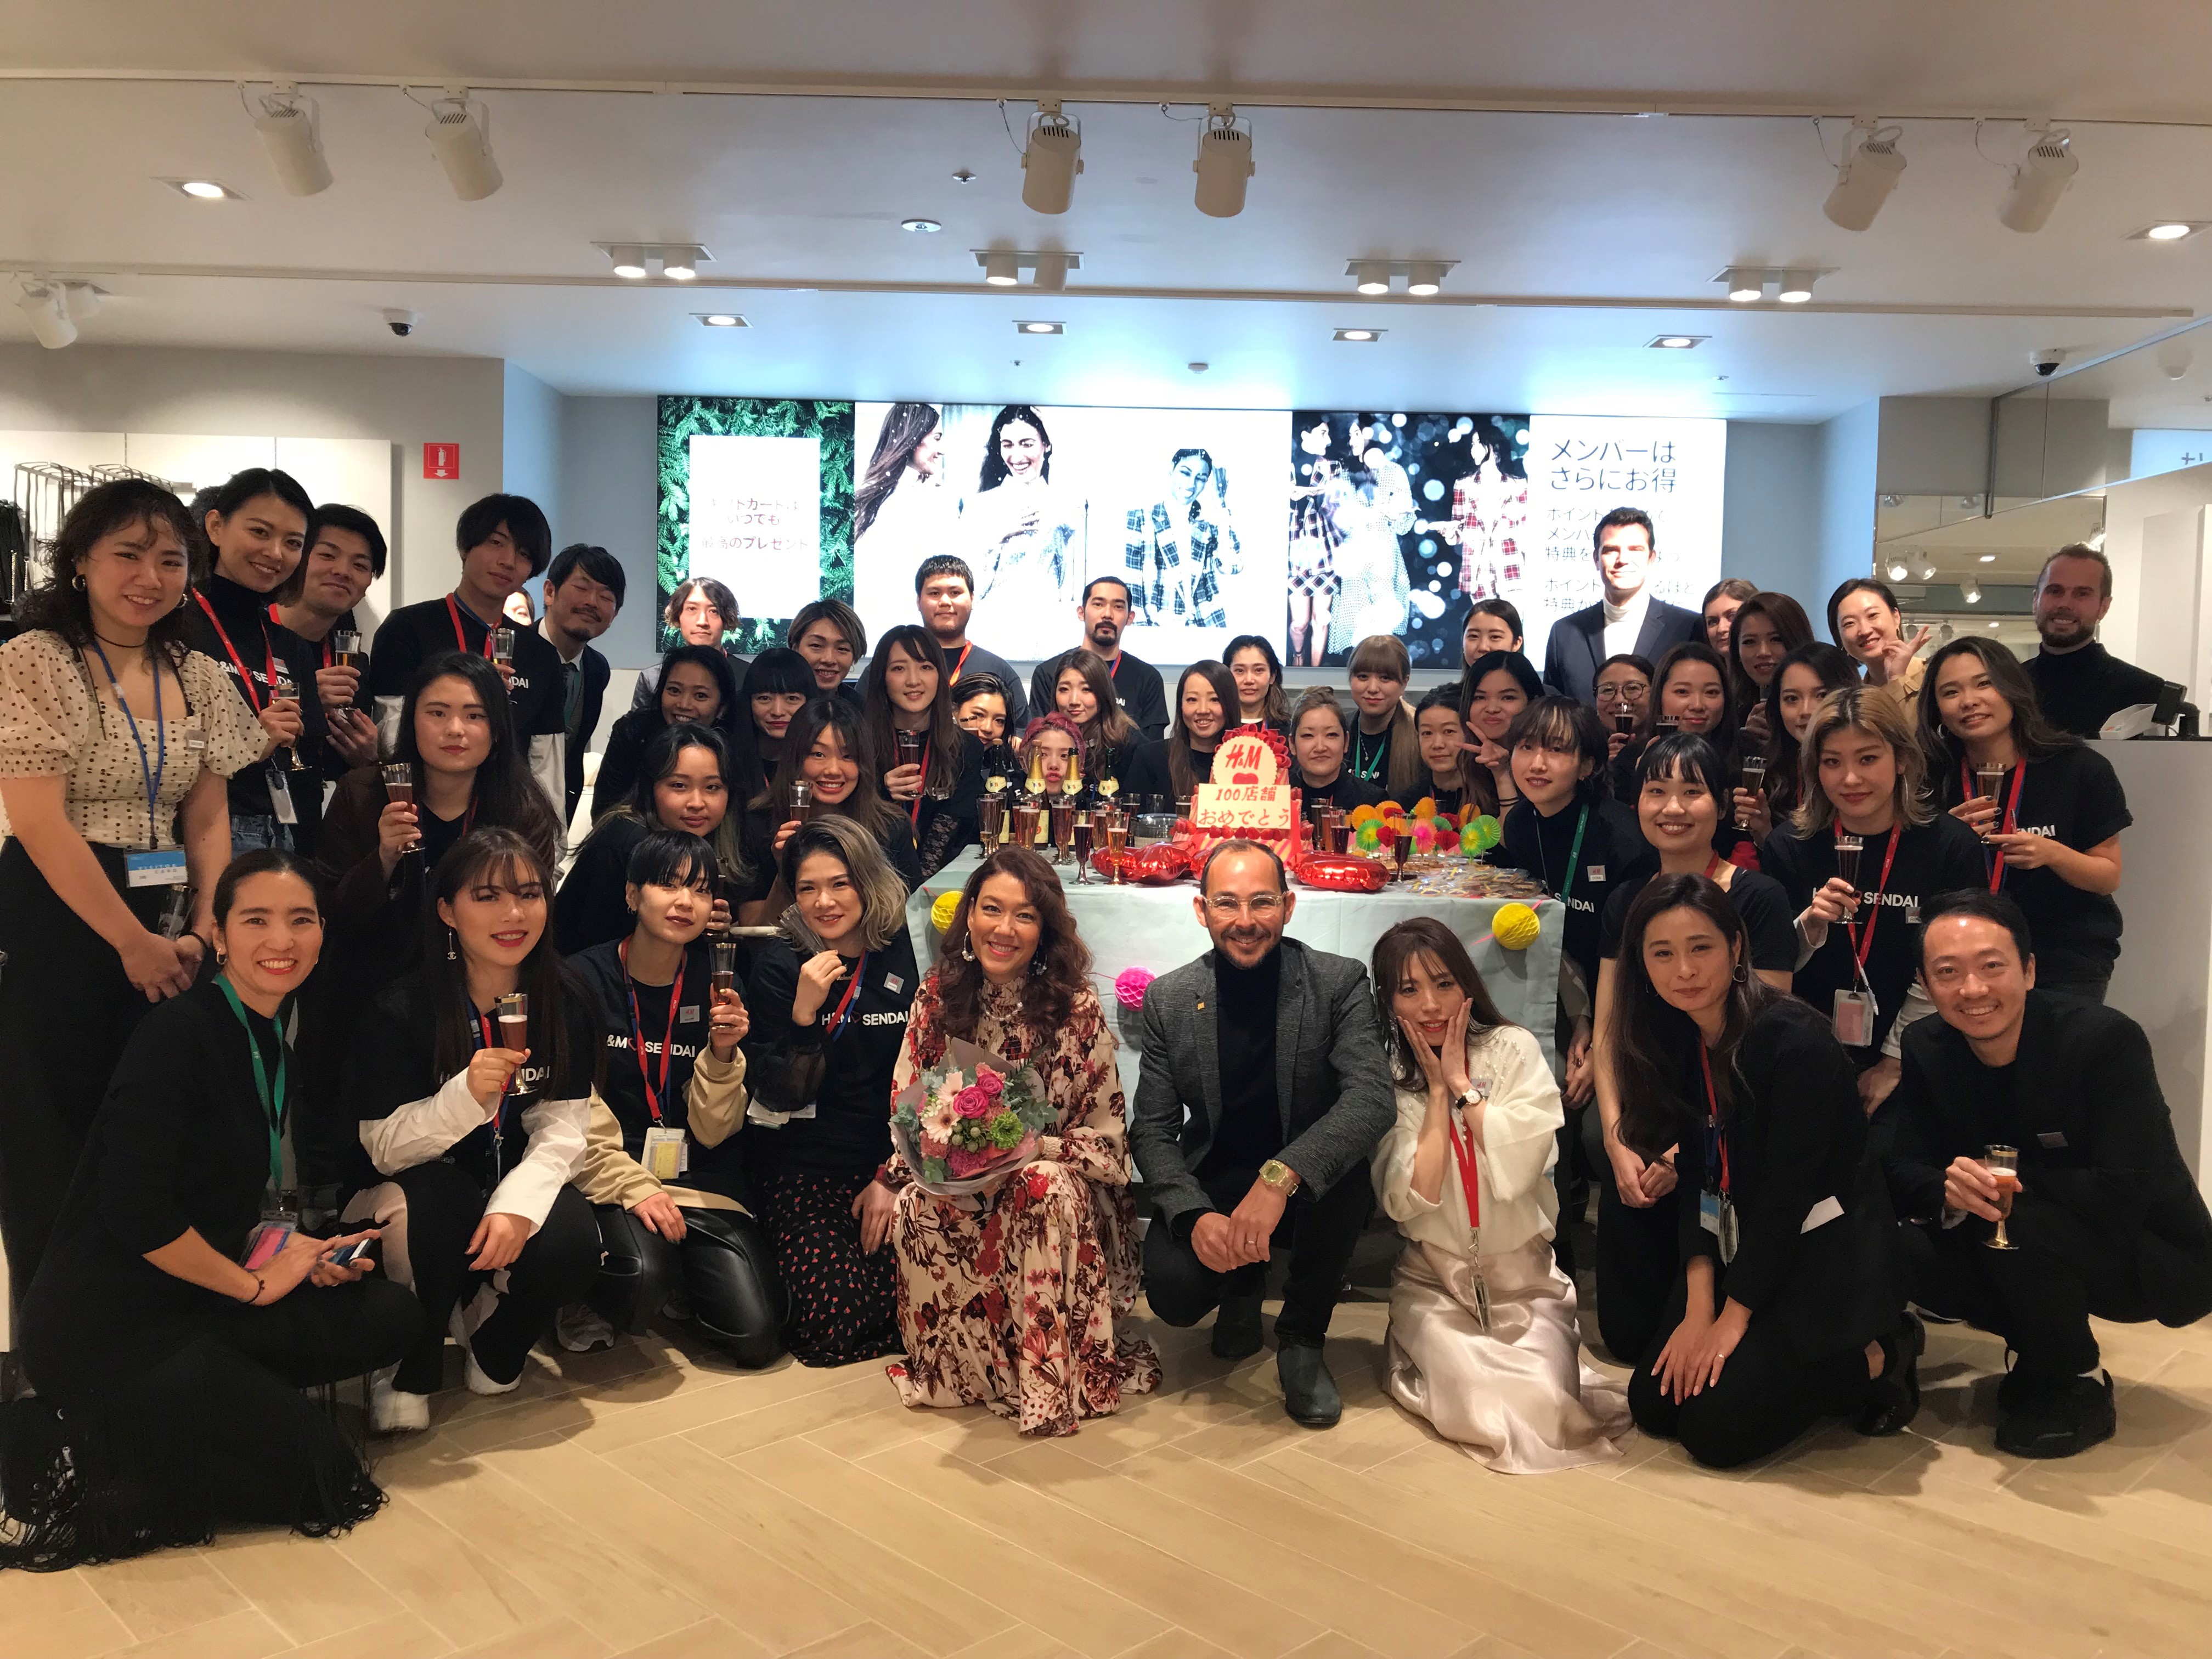 H&M Japan opened its 100th store in Sendai